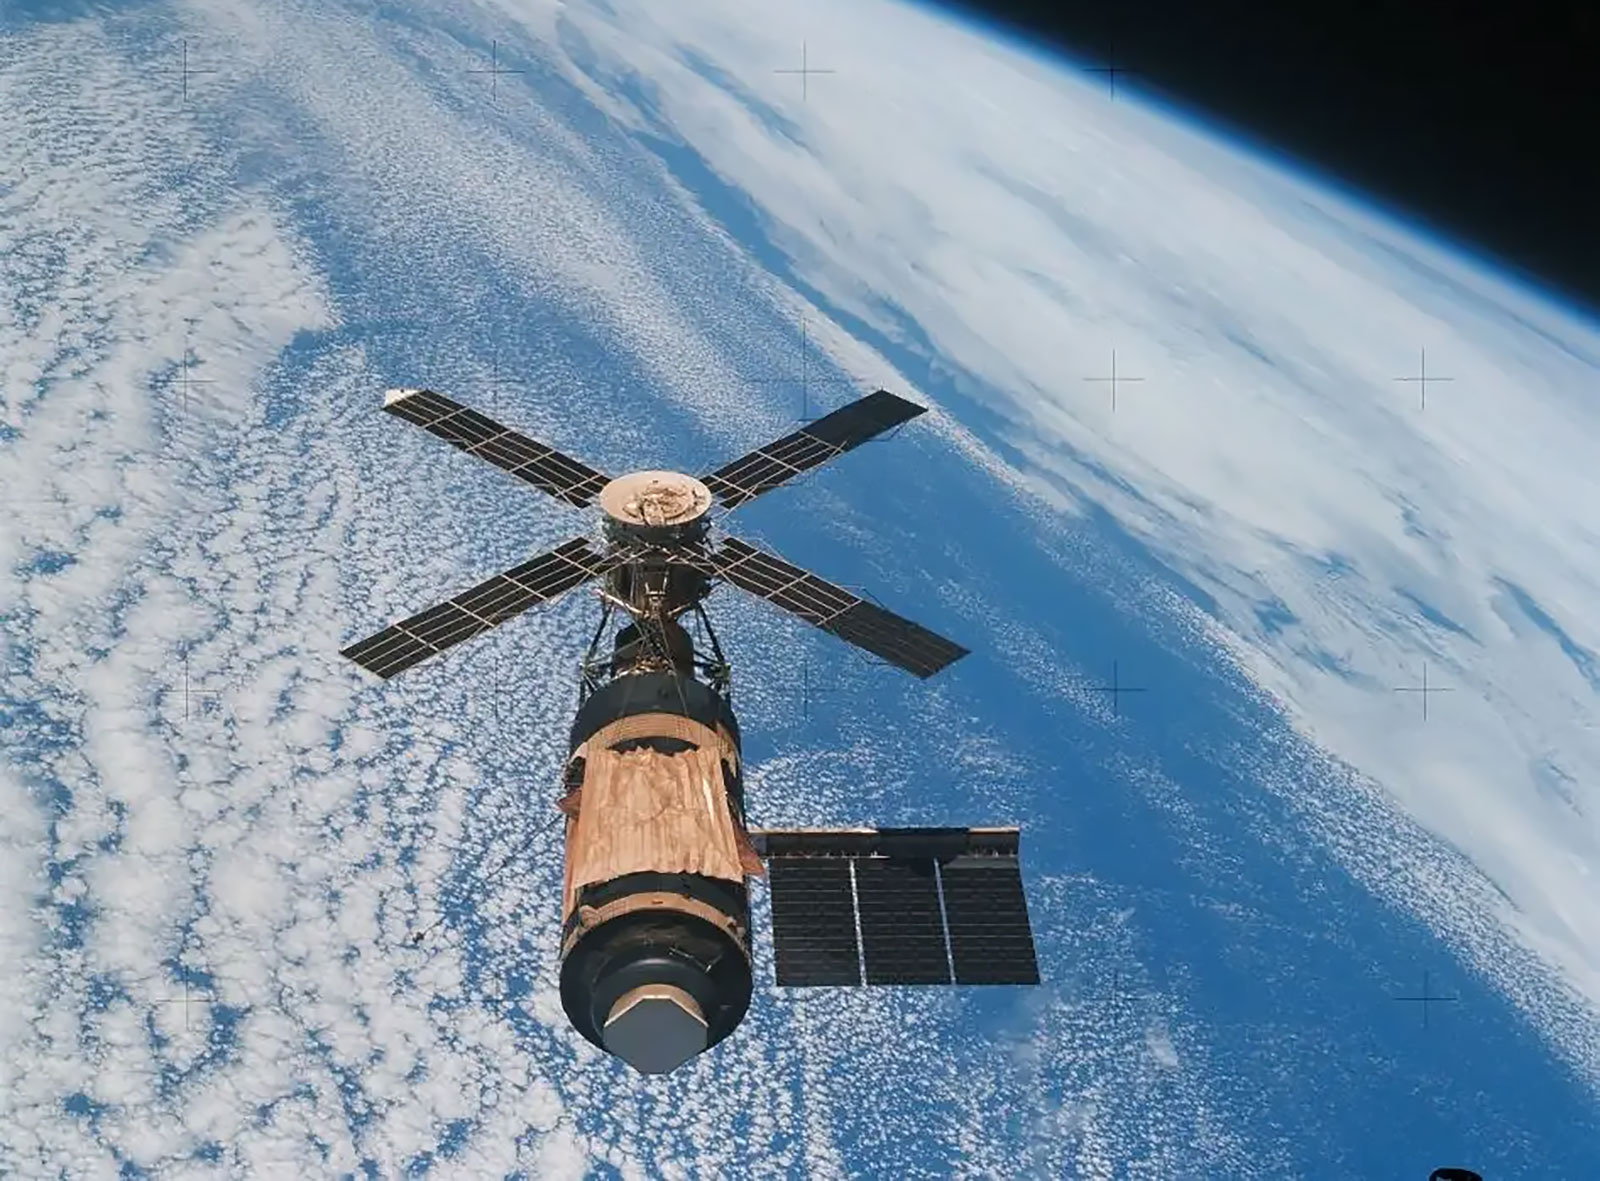 Skylab orbiting above the Earth